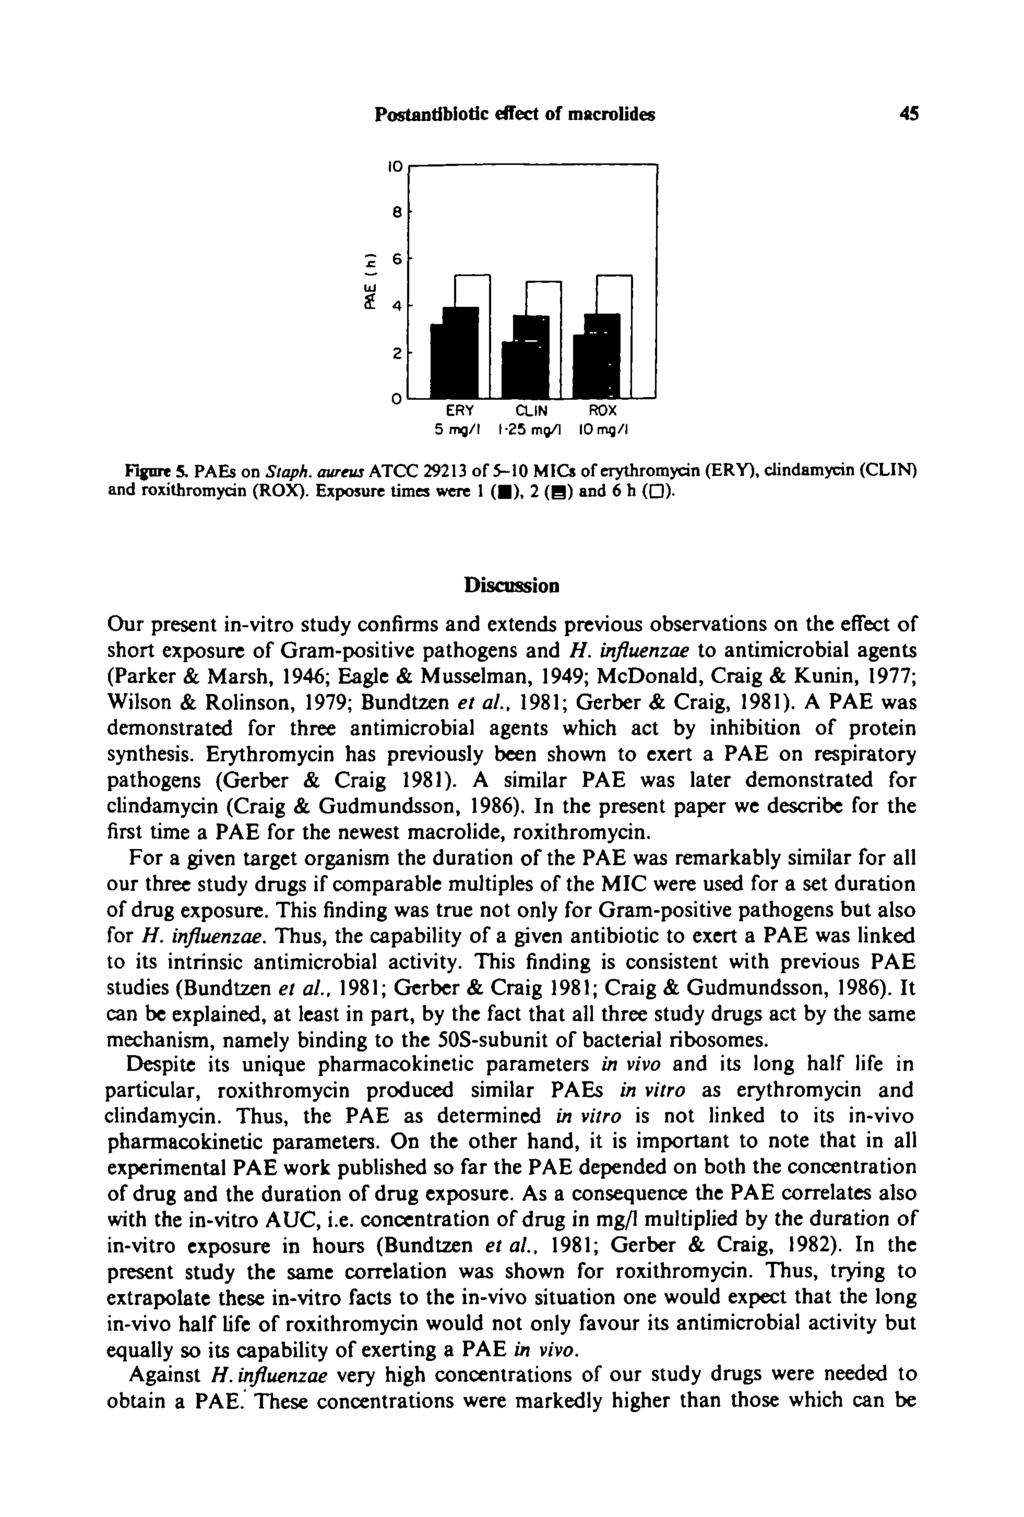 Postantibiotic effect of macrolides 45 10 e 2 6 UJ 4 2 0 u 1CUN LI 1 JHL ERY 5mg/l 1-25 mg/1 ROX IOmg/1 FTgnre 5. PAEs on Staph.